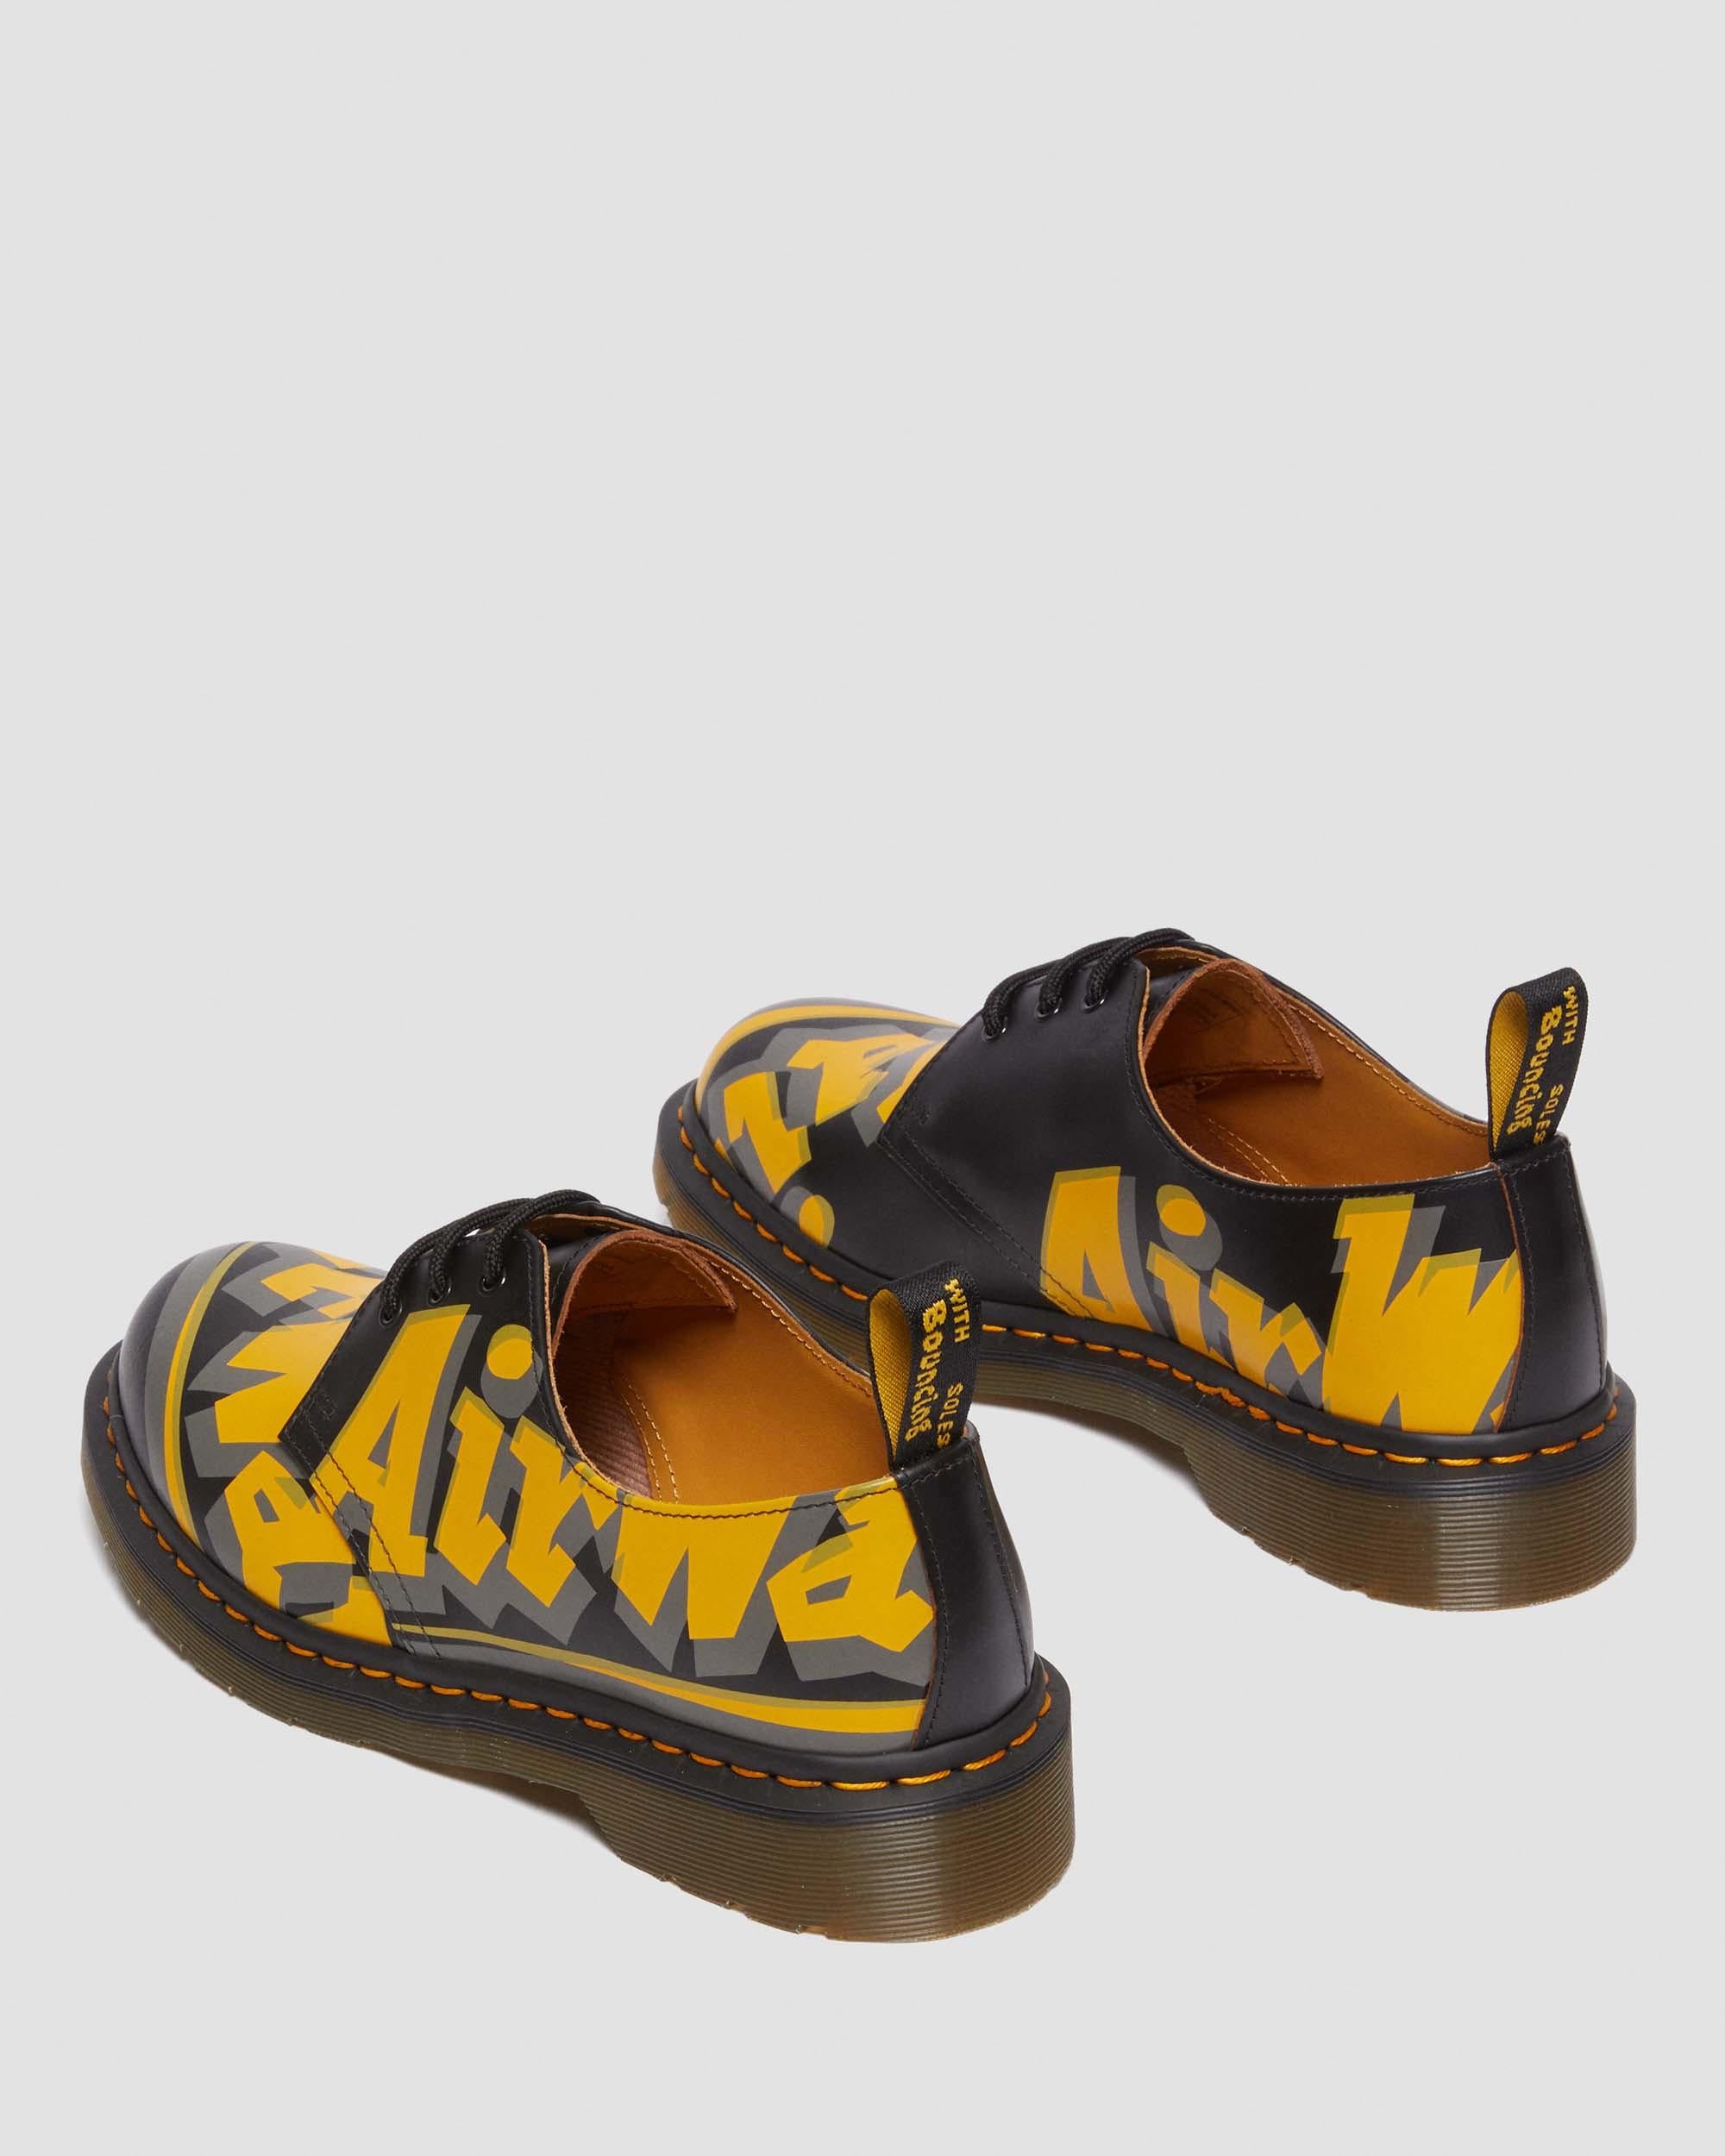 1461 Airwair Vintage Smooth Leather Shoes